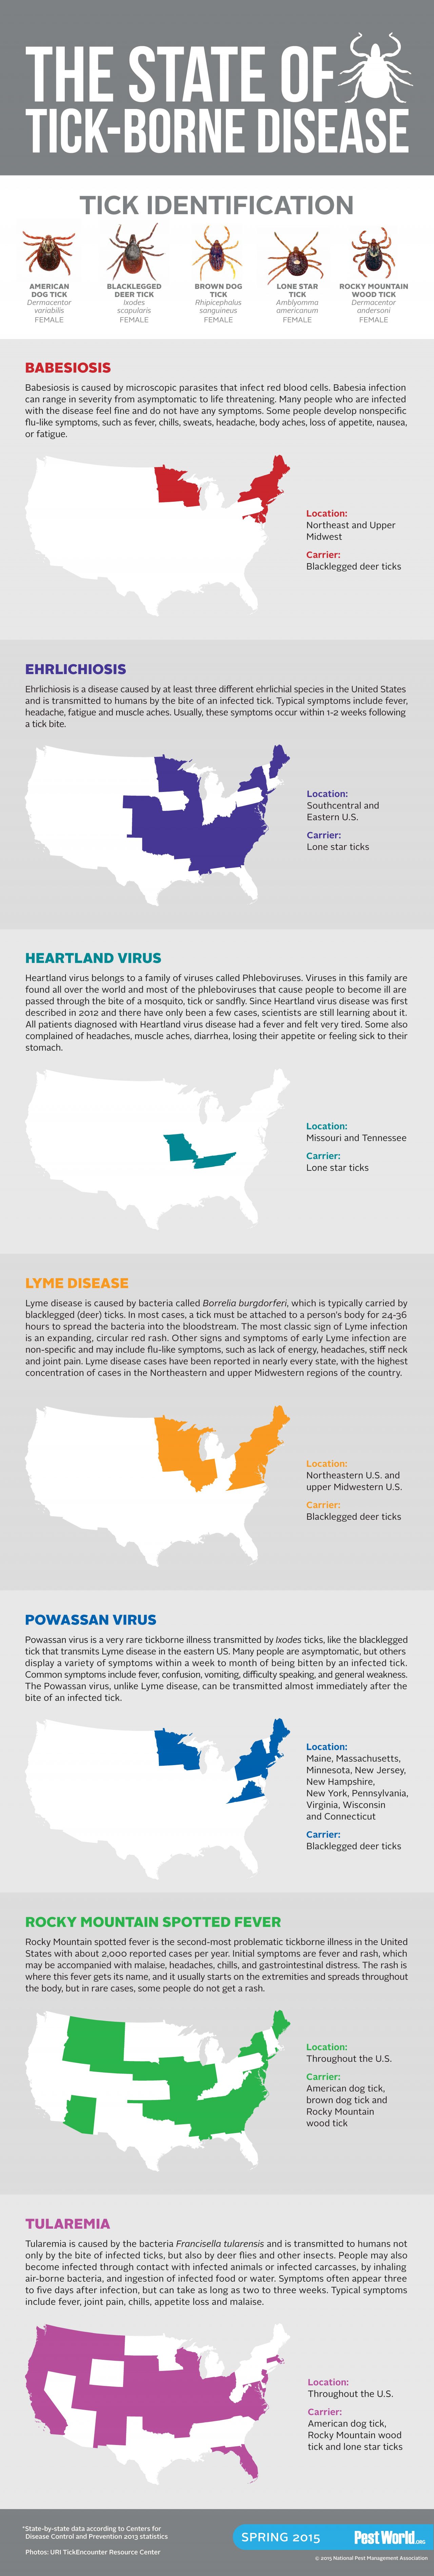 2015-tick-borne-disease-infographic_final.jpg